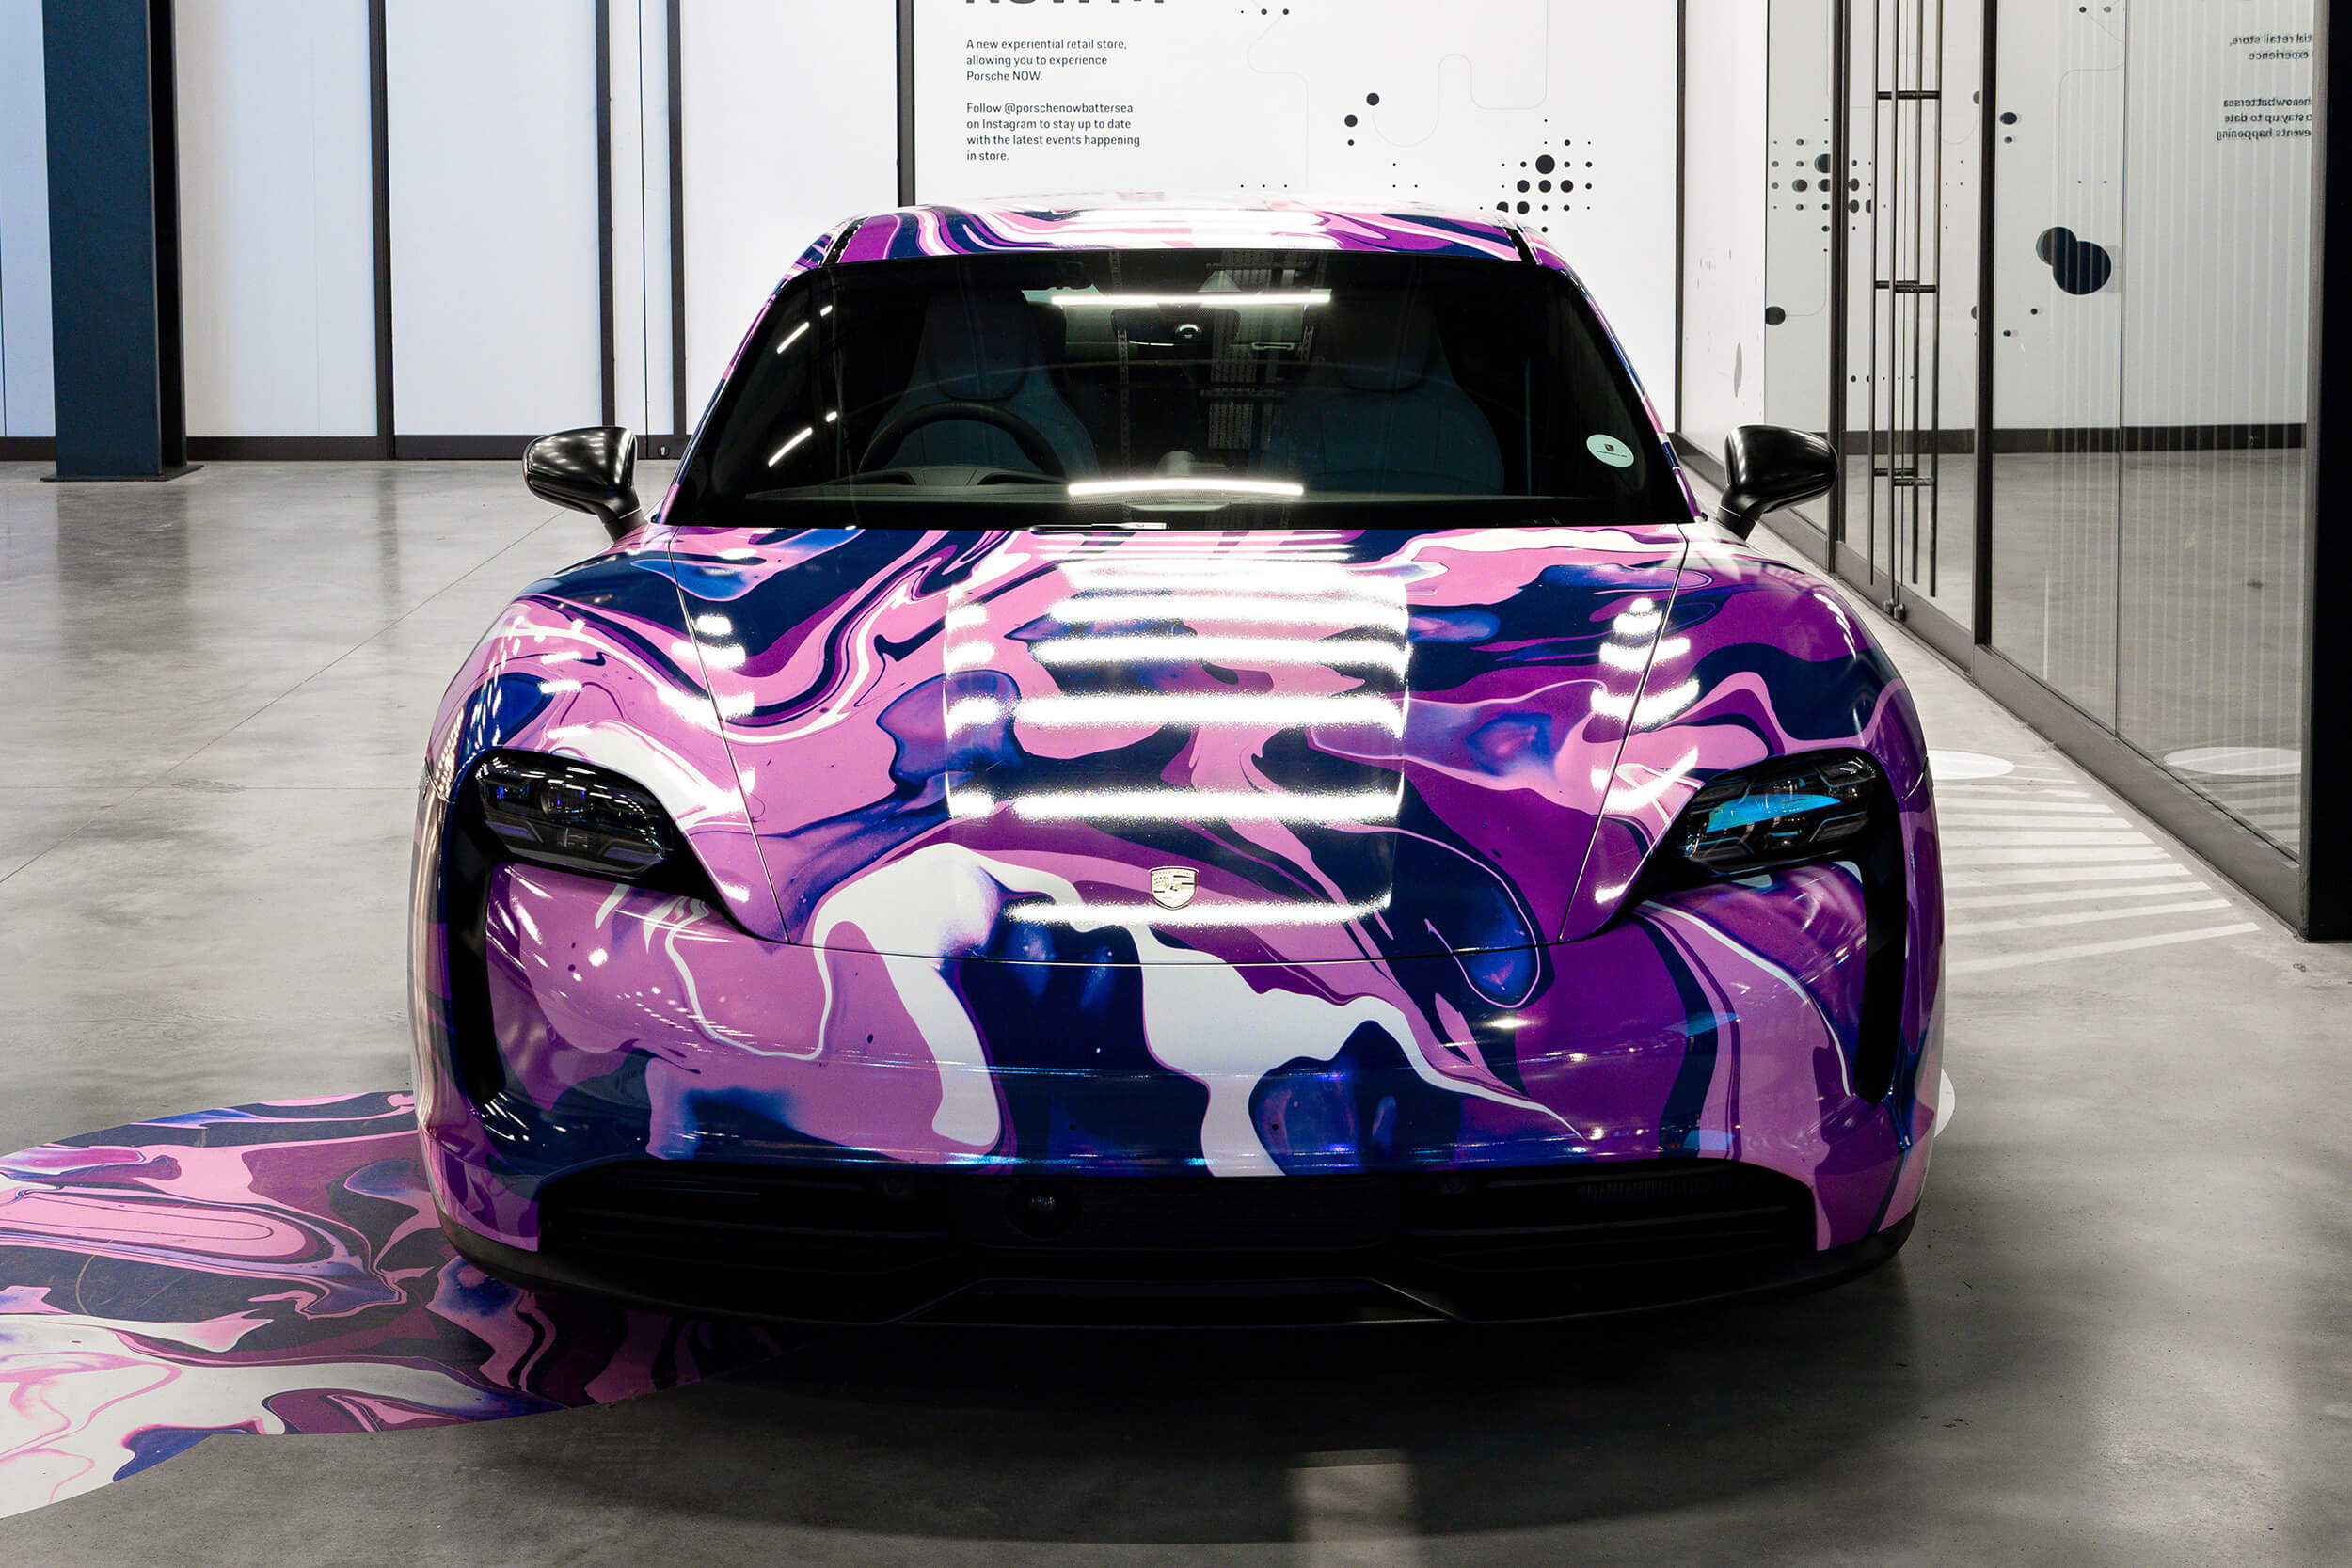 Craig Black x Porsche_Acrylic Fusion Texture_Taycan Car